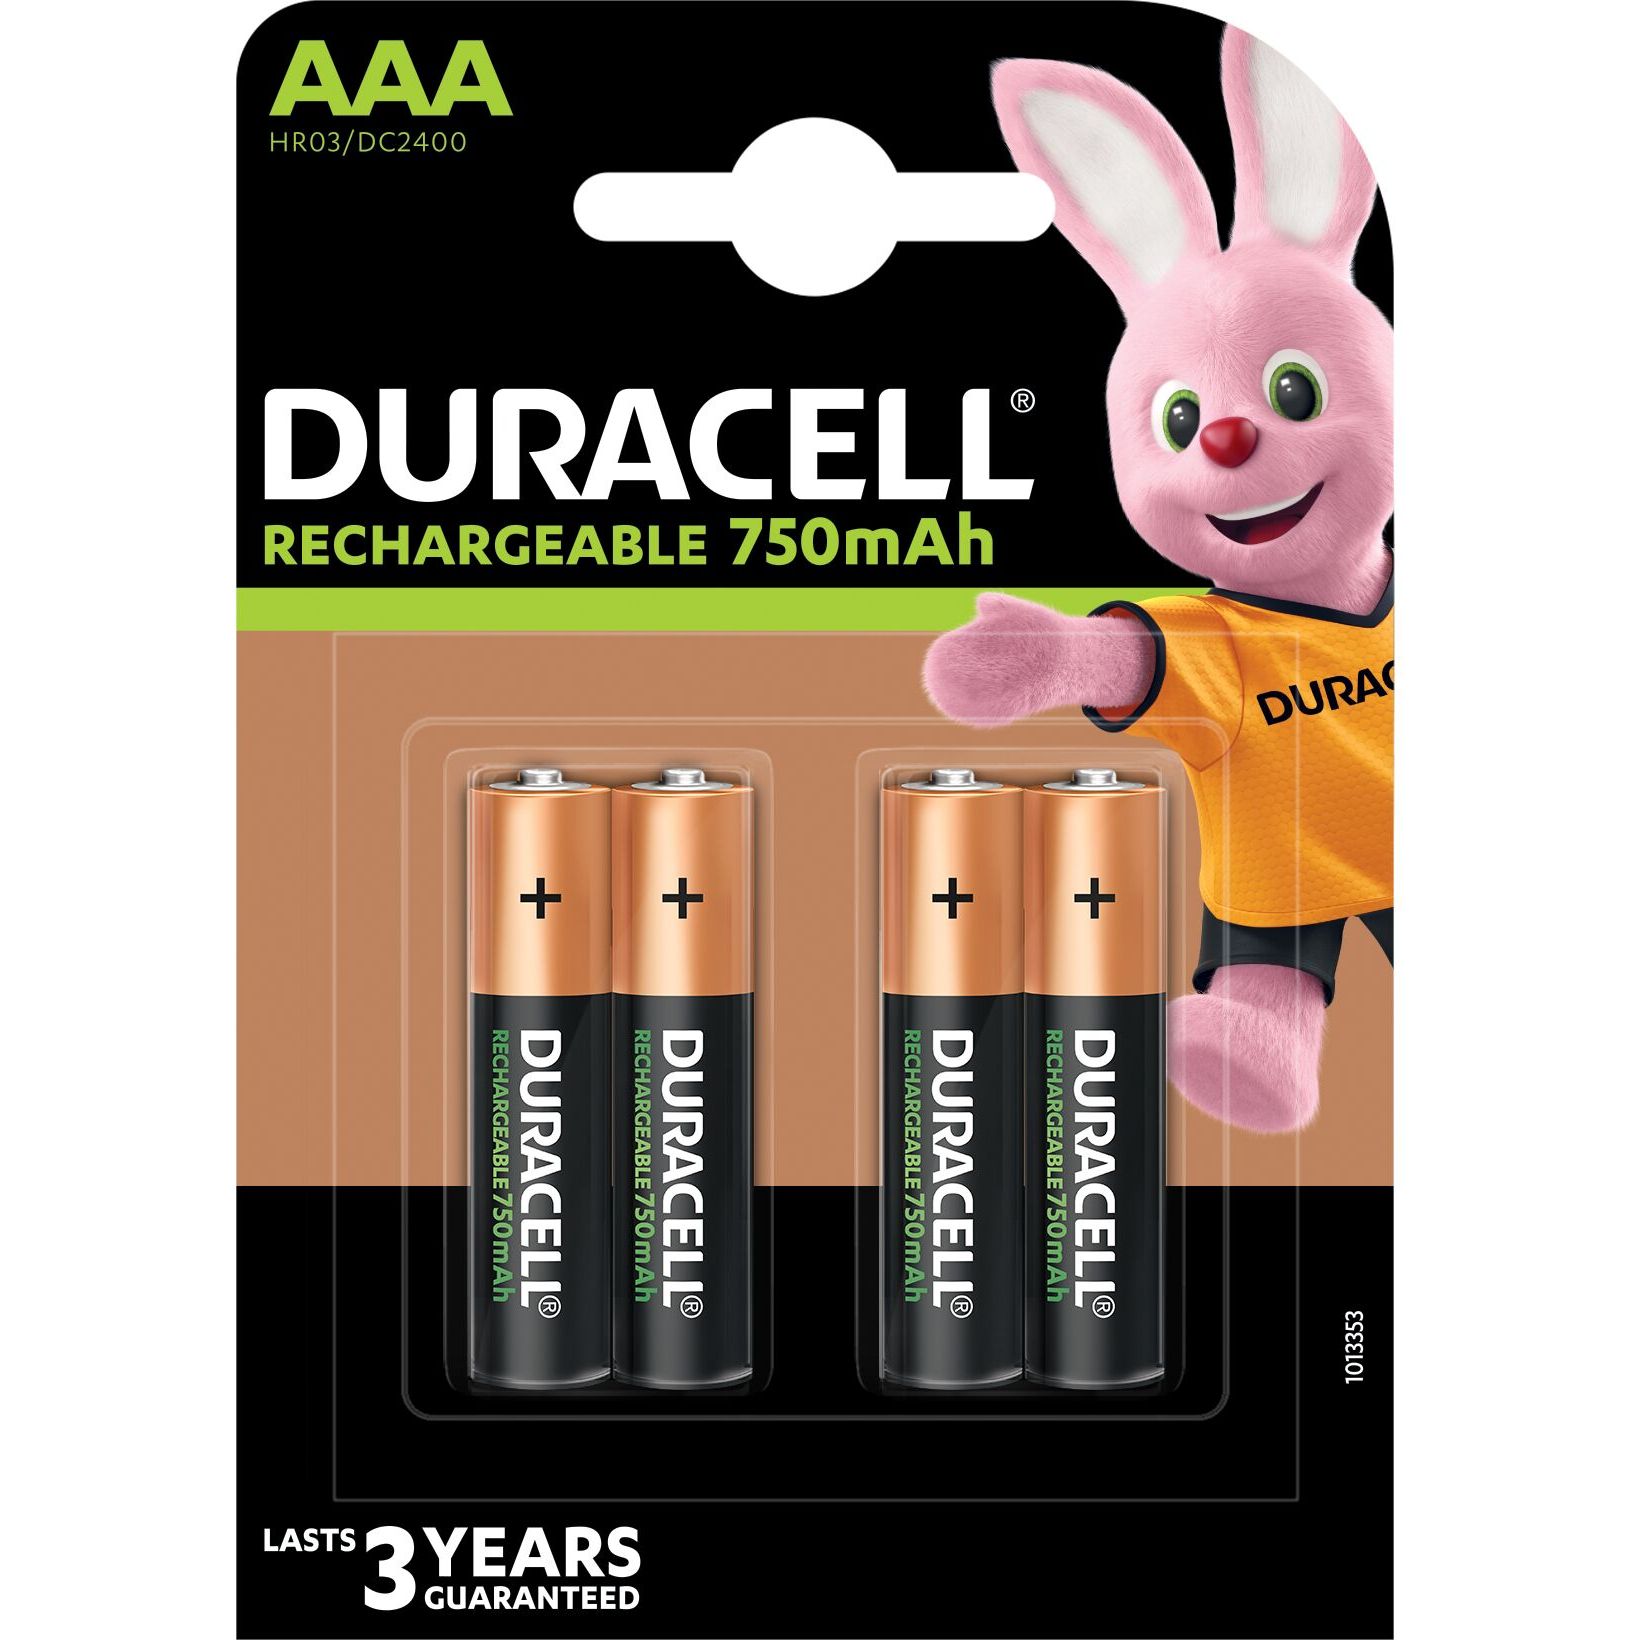 Аккумуляторы Duracell Rechargeable AAA 750 mAh HR03/DC2400, 4 шт. (5005004) - фото 2